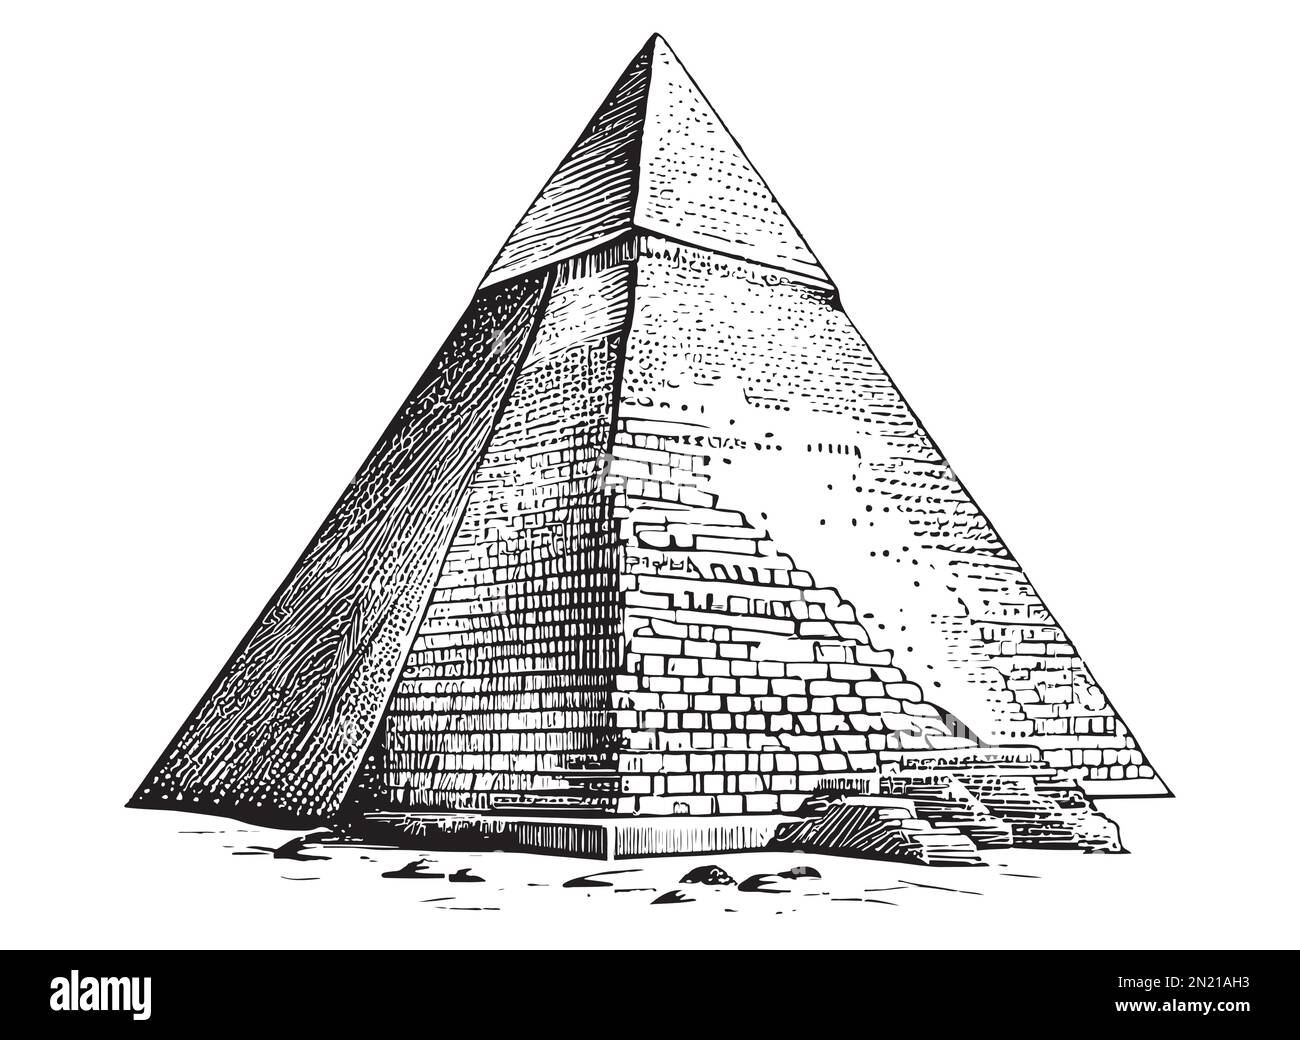 pyramid hand drawn sketch vector illustration Stock Vector